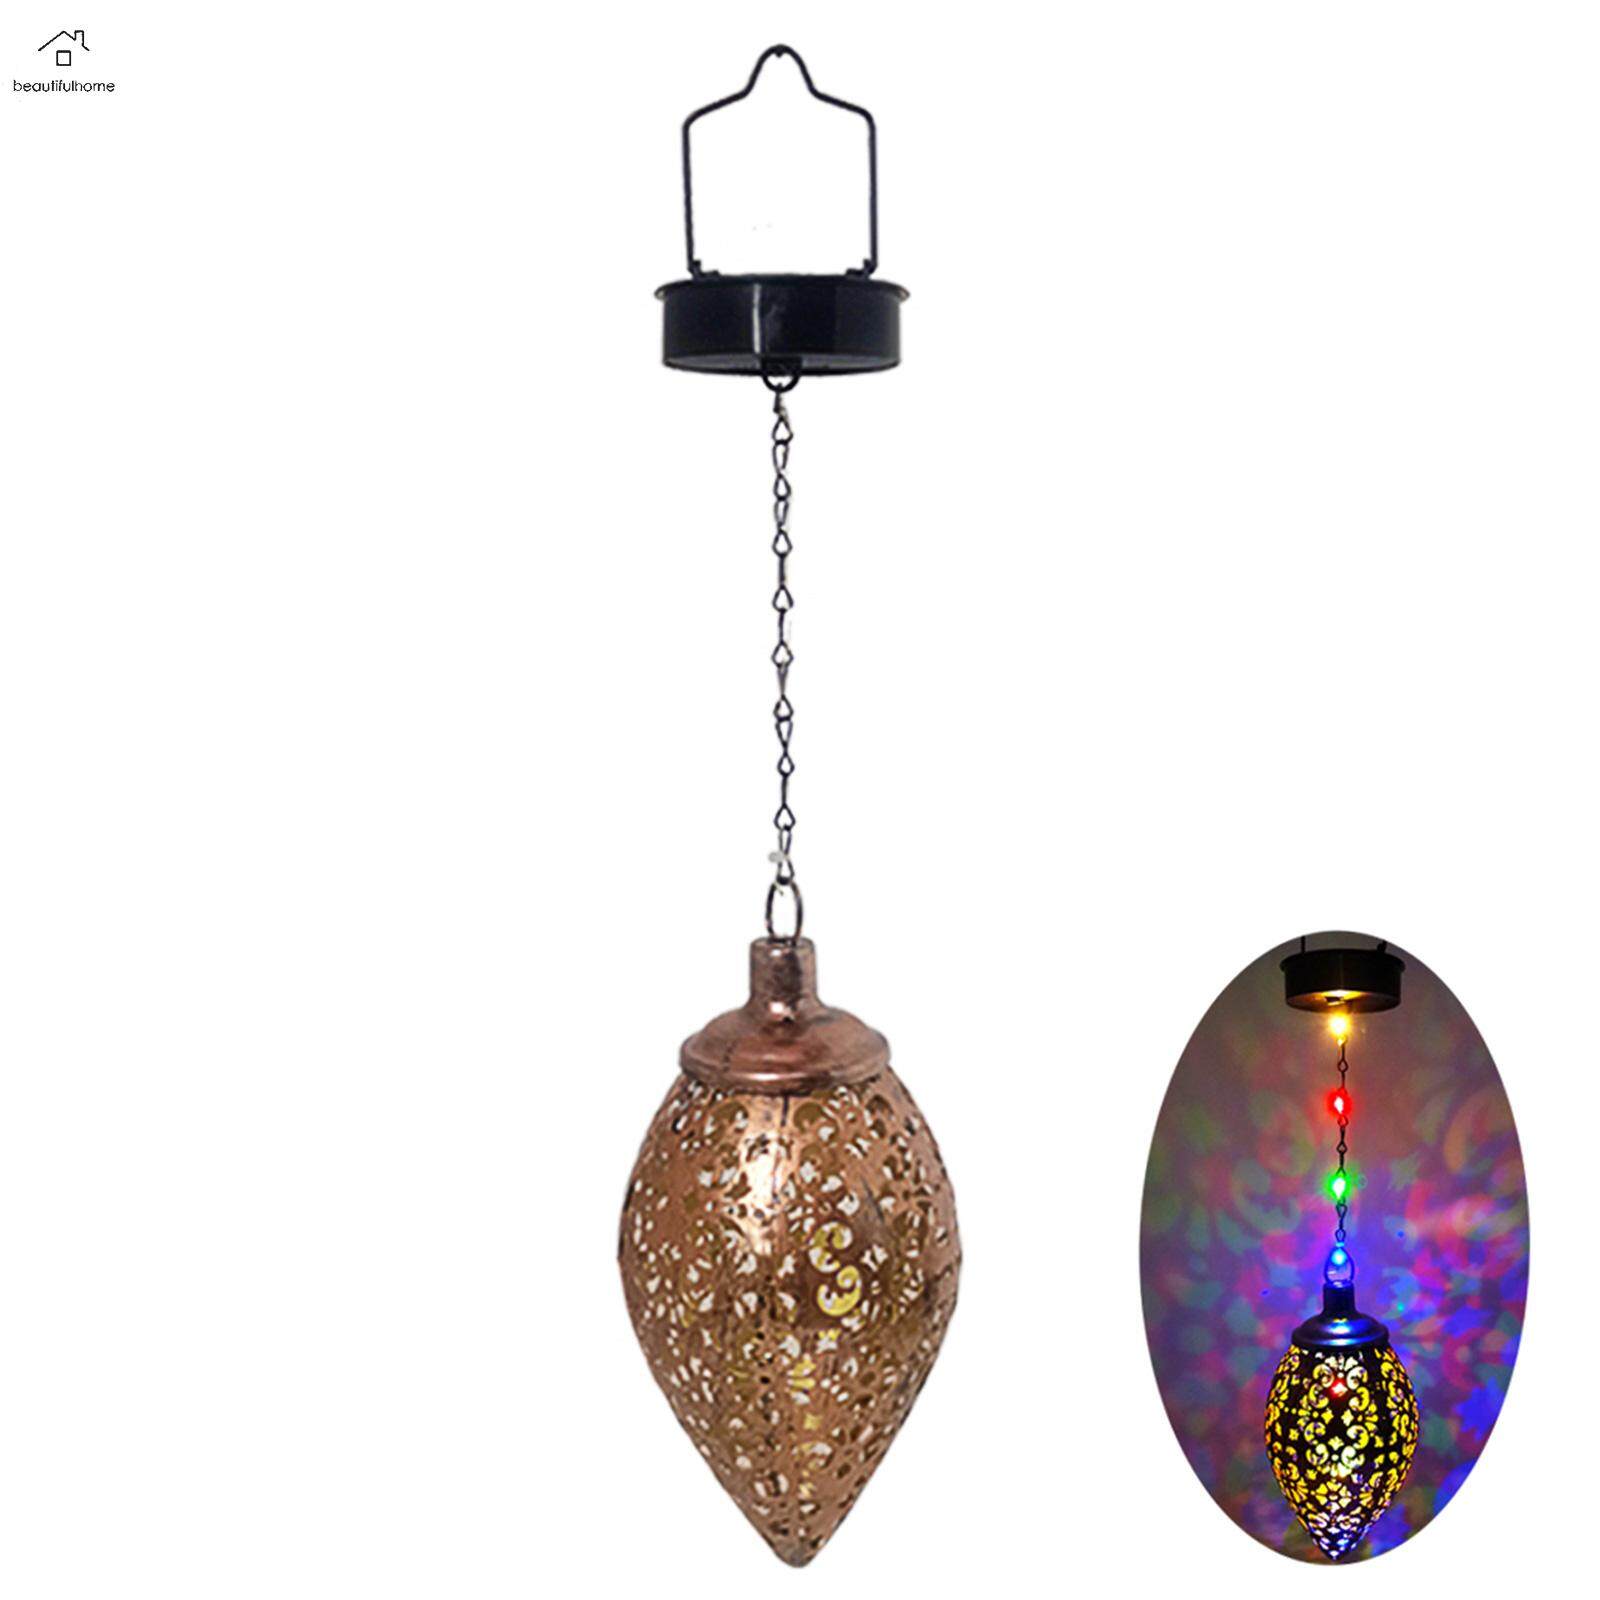 Solar Decorative Lanterns Hollow Butterfly Iron Pendant Lantern Waterproof